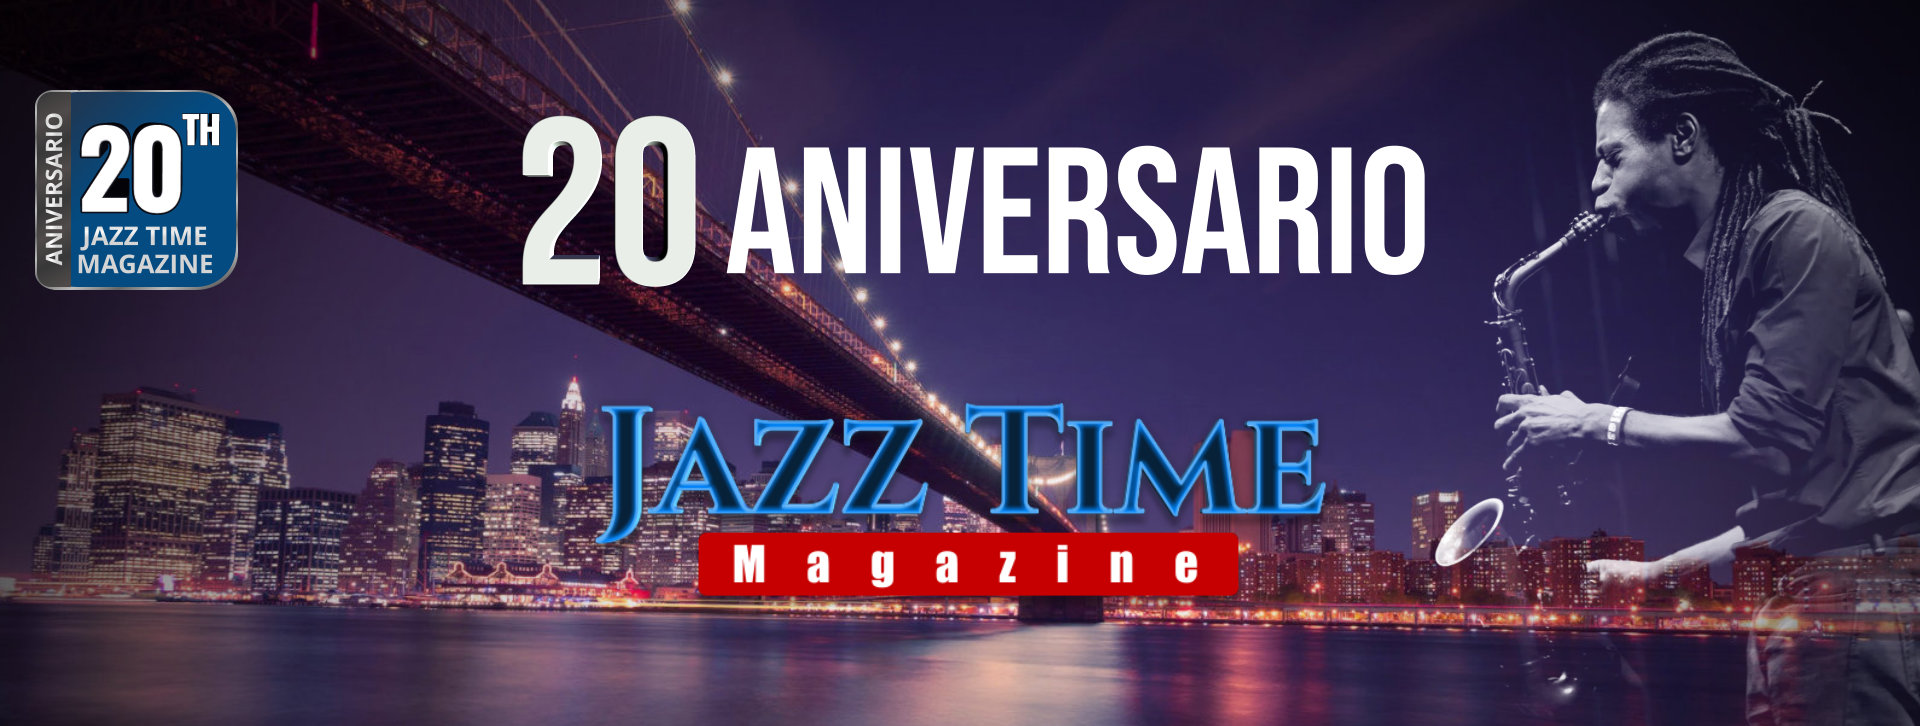 Jazz Time Cumple 20 años!!!